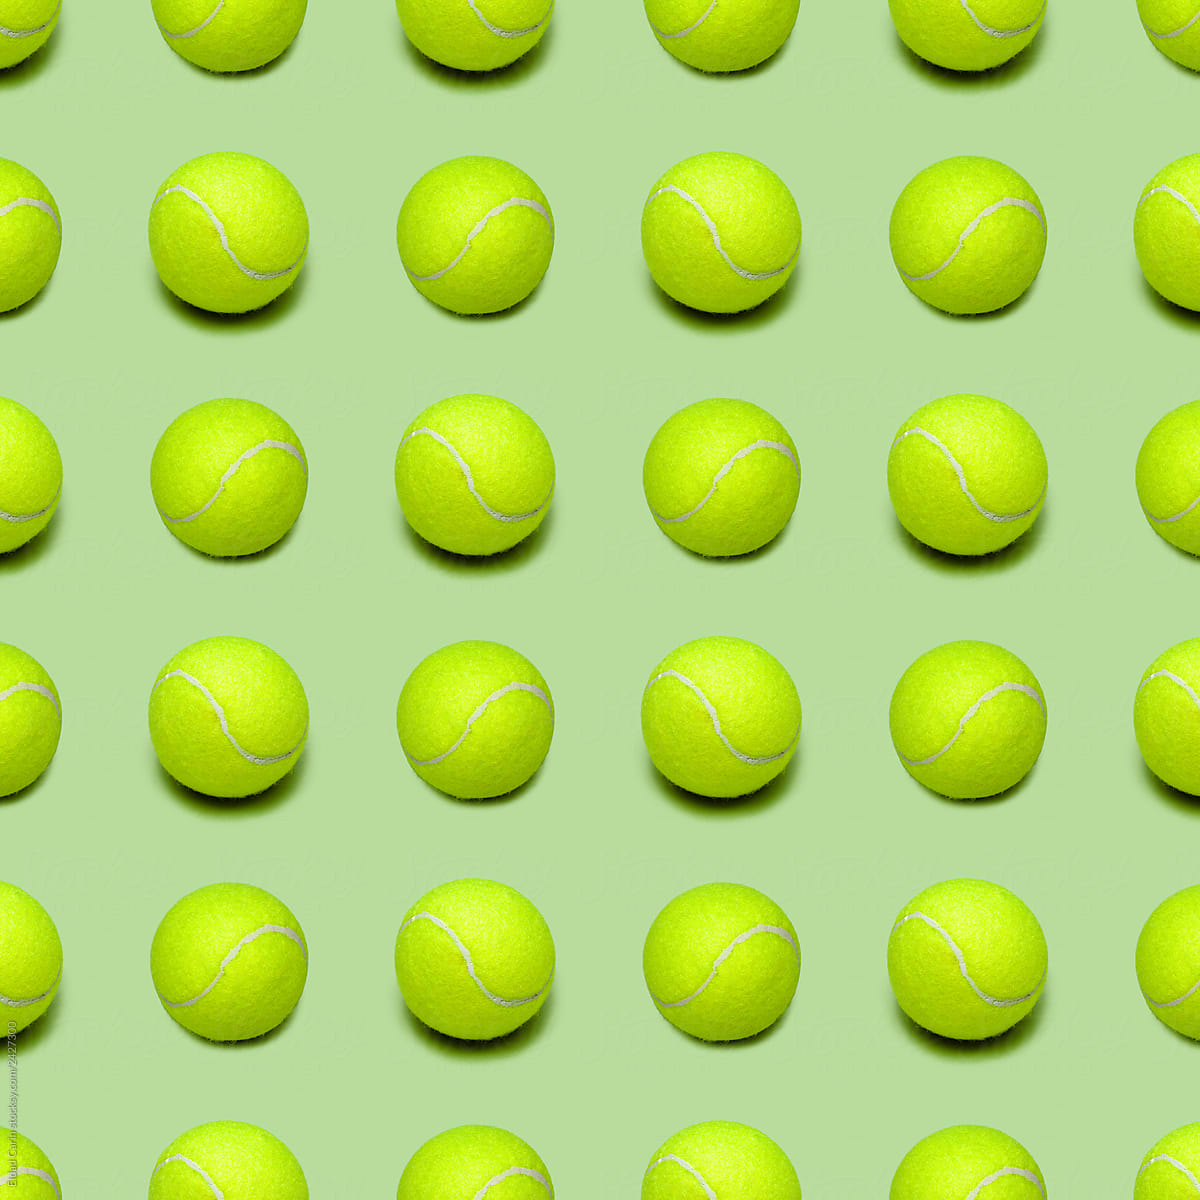 Tennis Ball Pattern on Pale Green